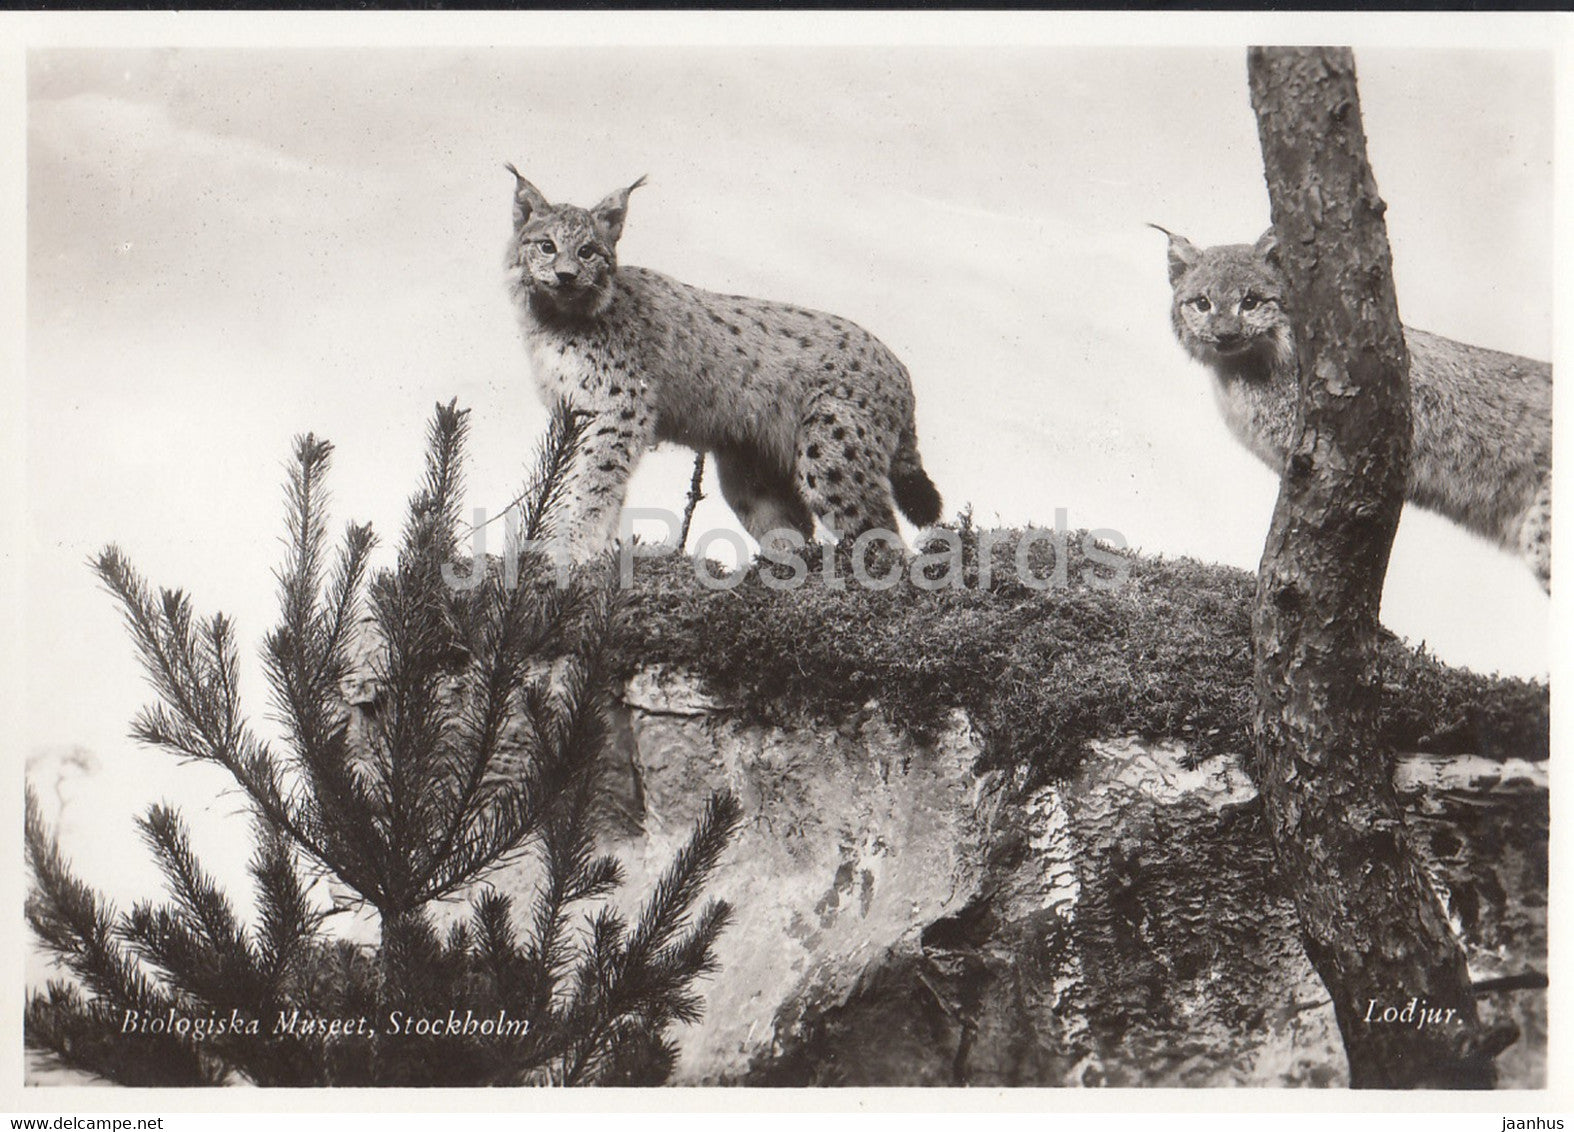 Biologiska Museet - Biological Museum - Lynx - animals - Sweden - unused - JH Postcards